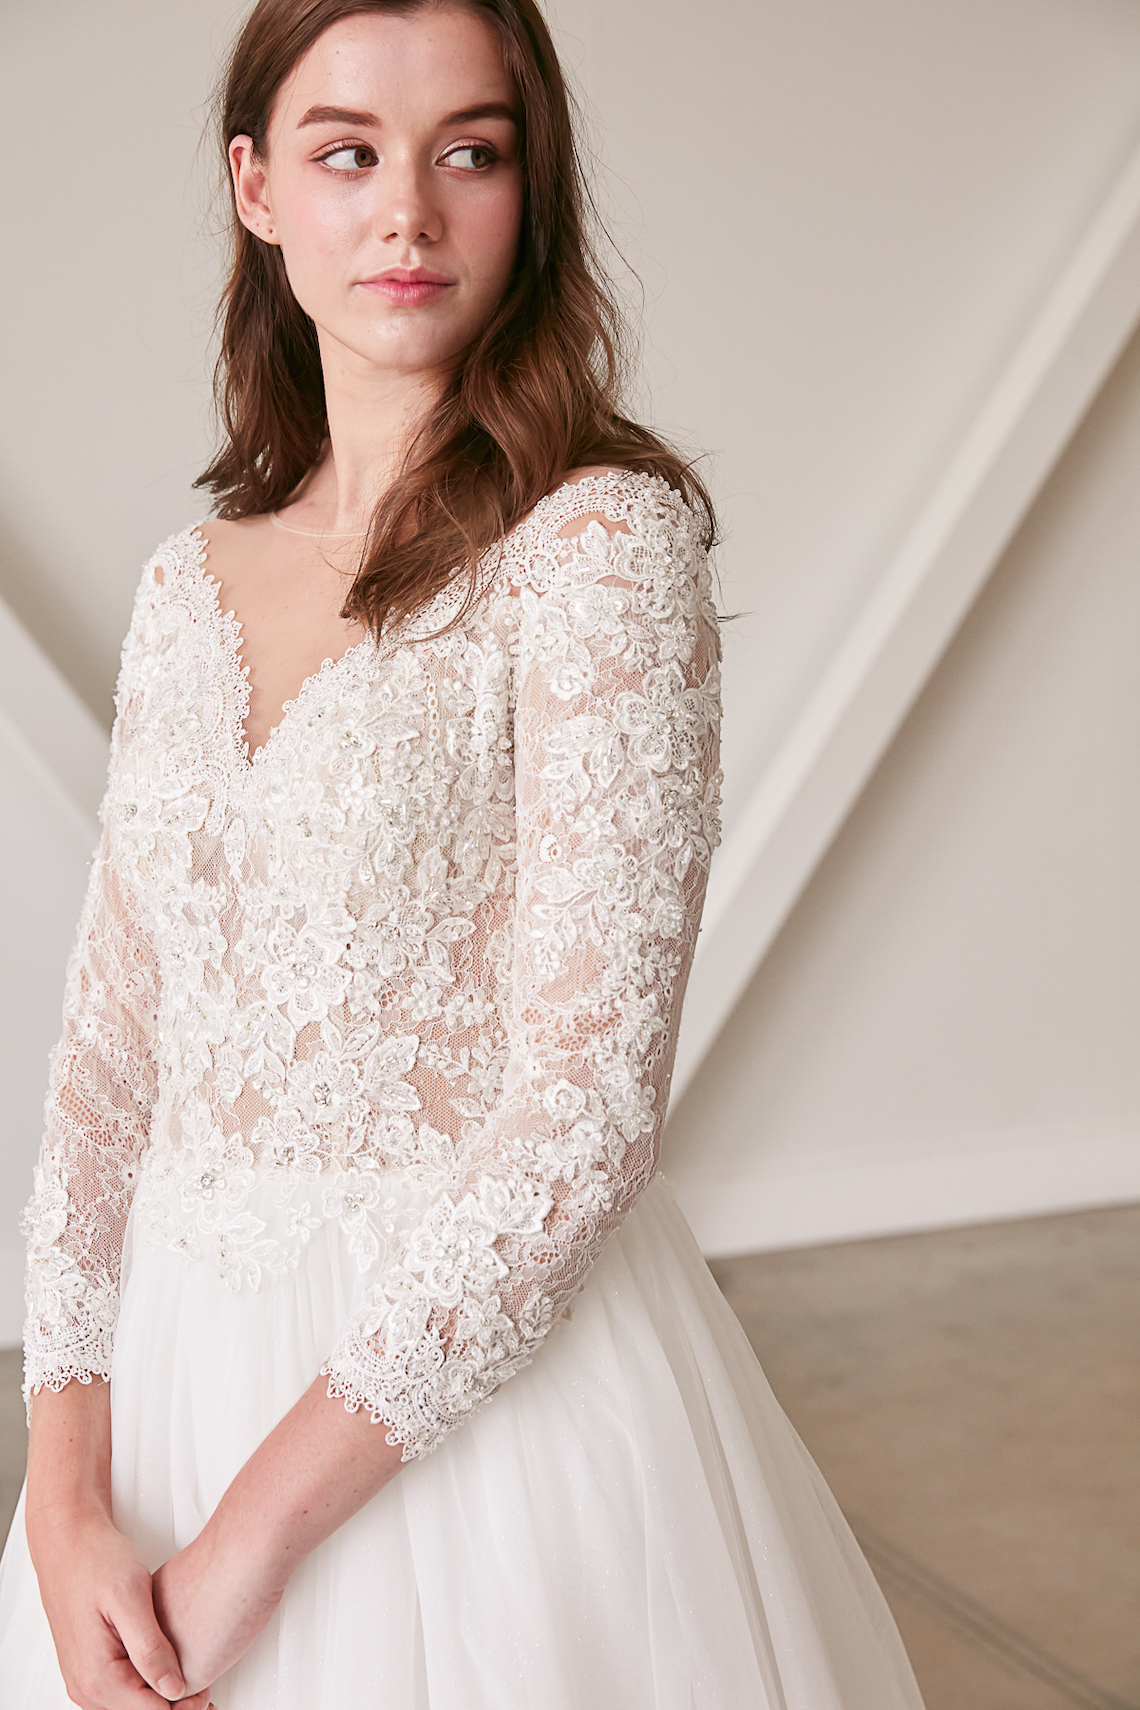 Lyra Vega Online Wedding Dresses Made-to-Measure Under 1200 – Bridal Musings 47